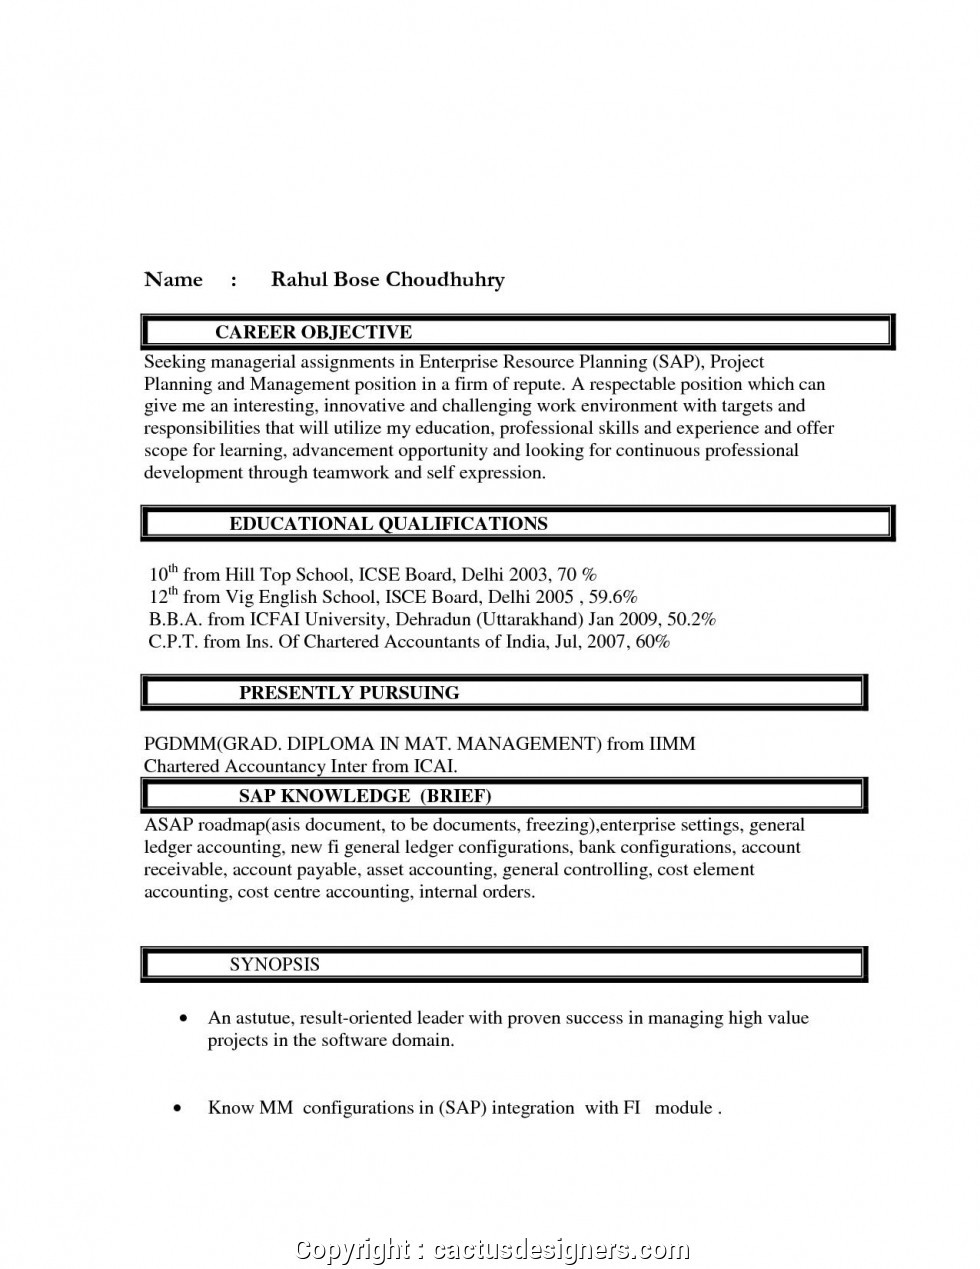 sample resume objective for freshers